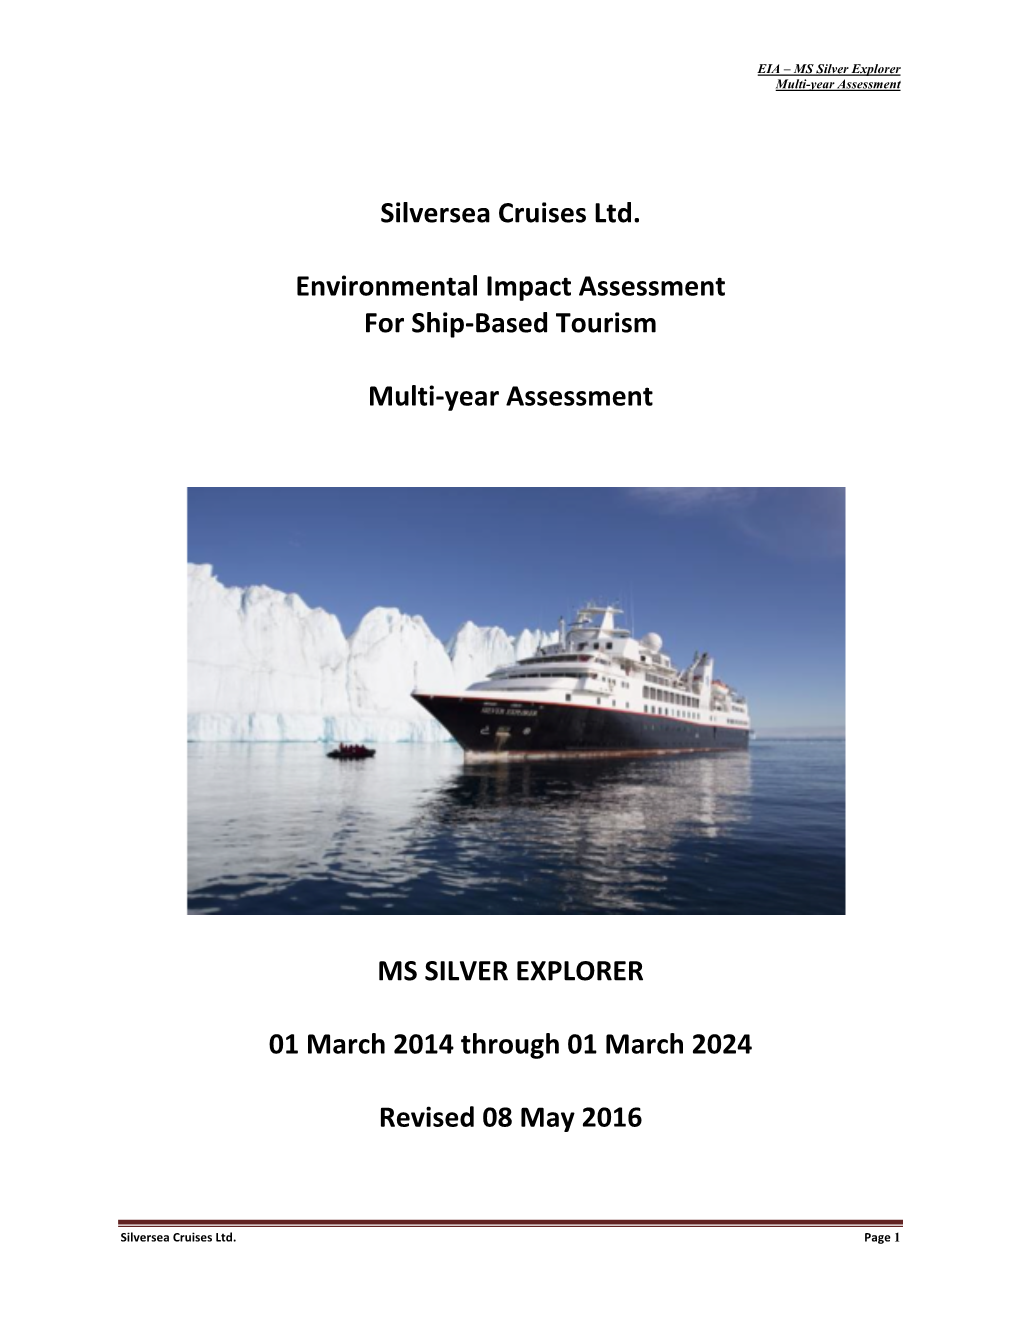 Silversea Cruises Ltd. Environmental Impact Assessment for Ship-Based Tourism